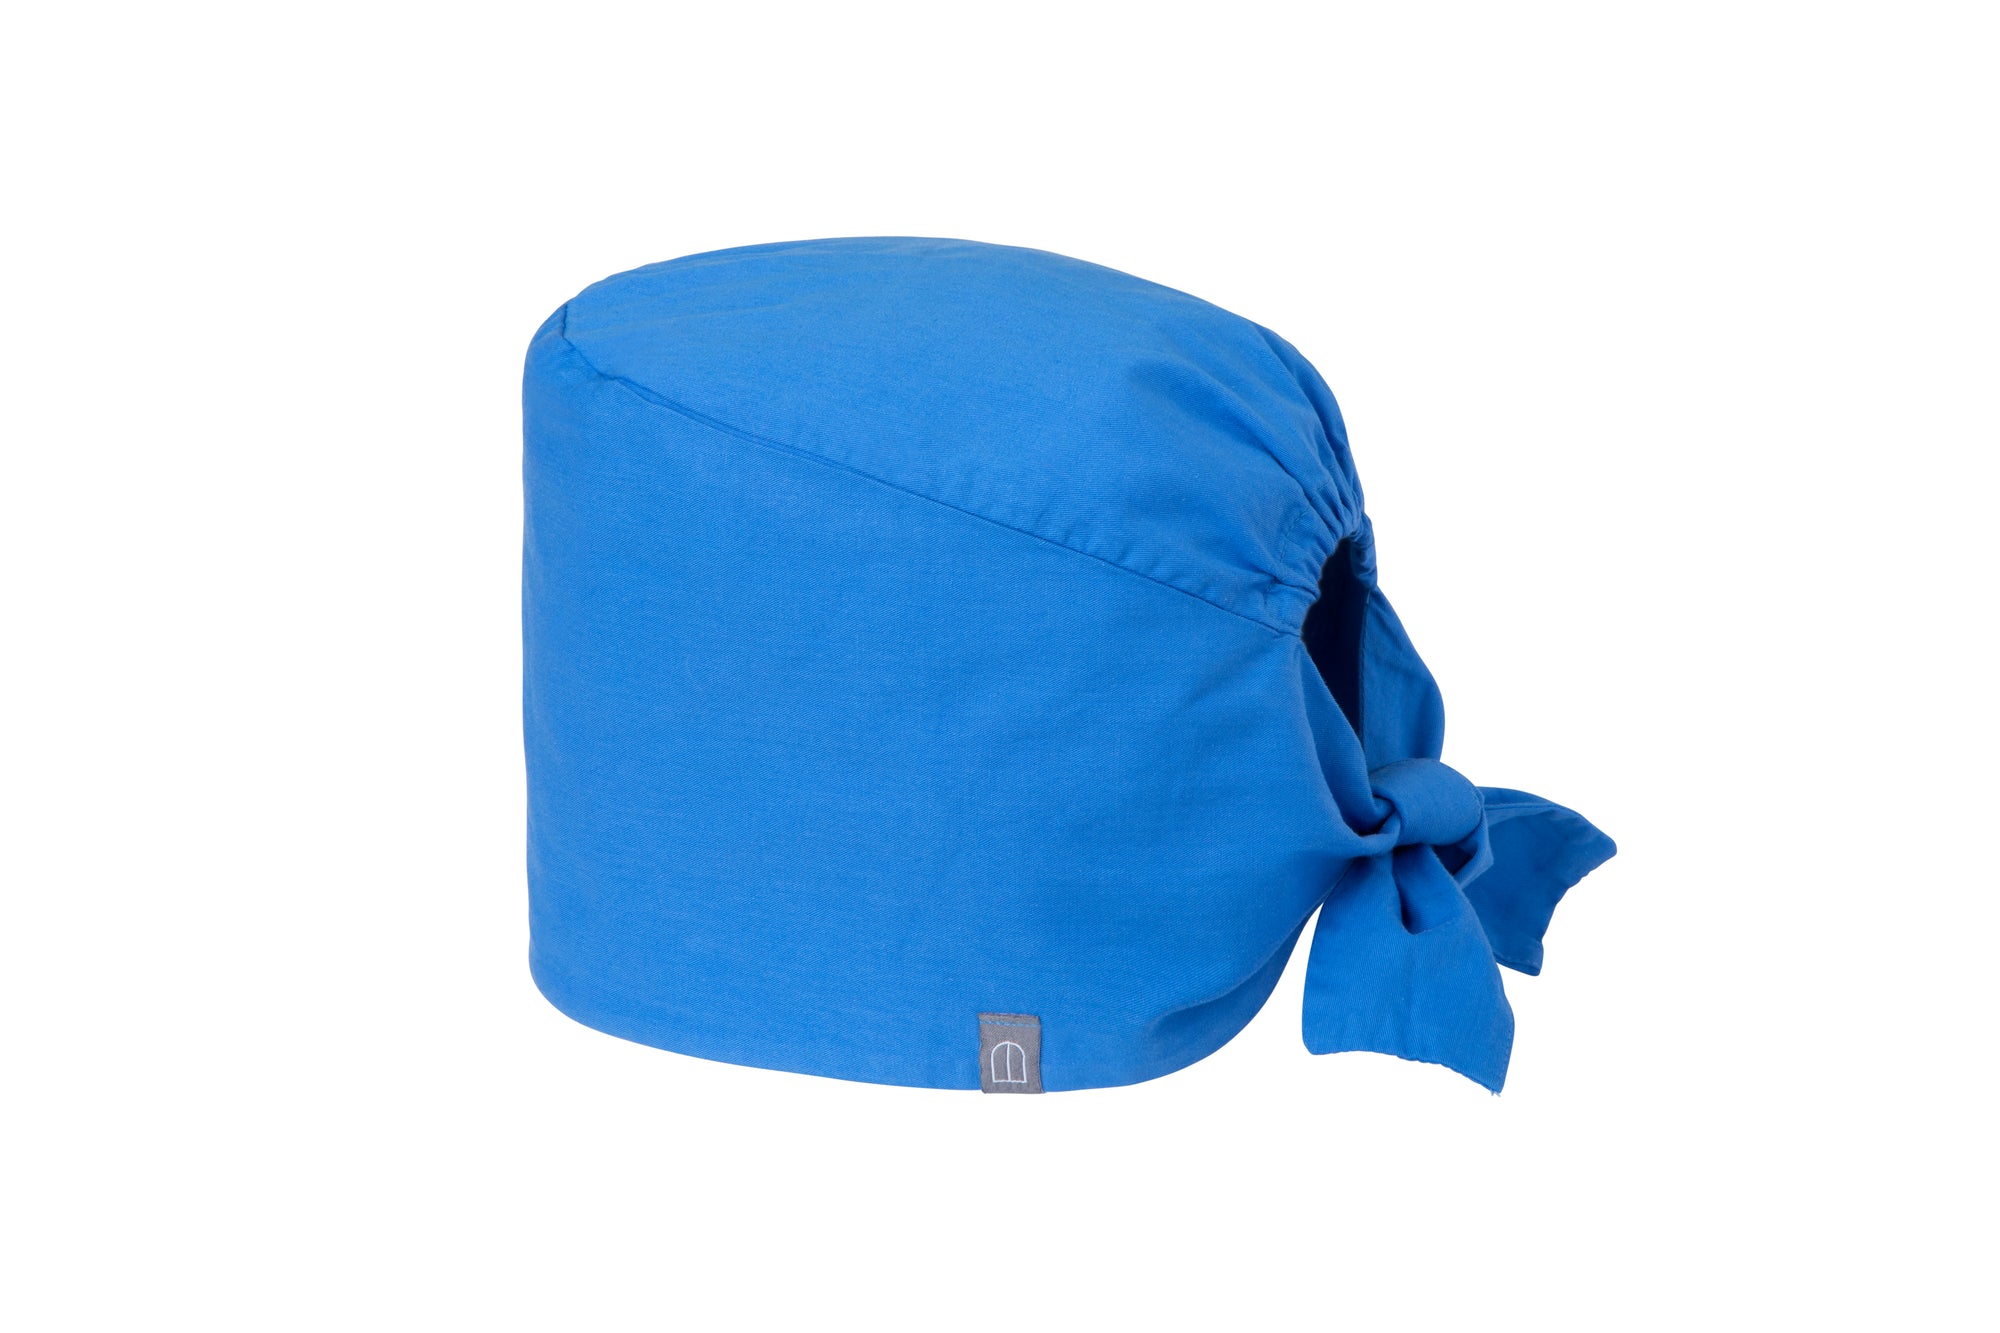 Blue Scrub Cap, 100% Cotton Surgical Cap Breathable Fabric, Unisex